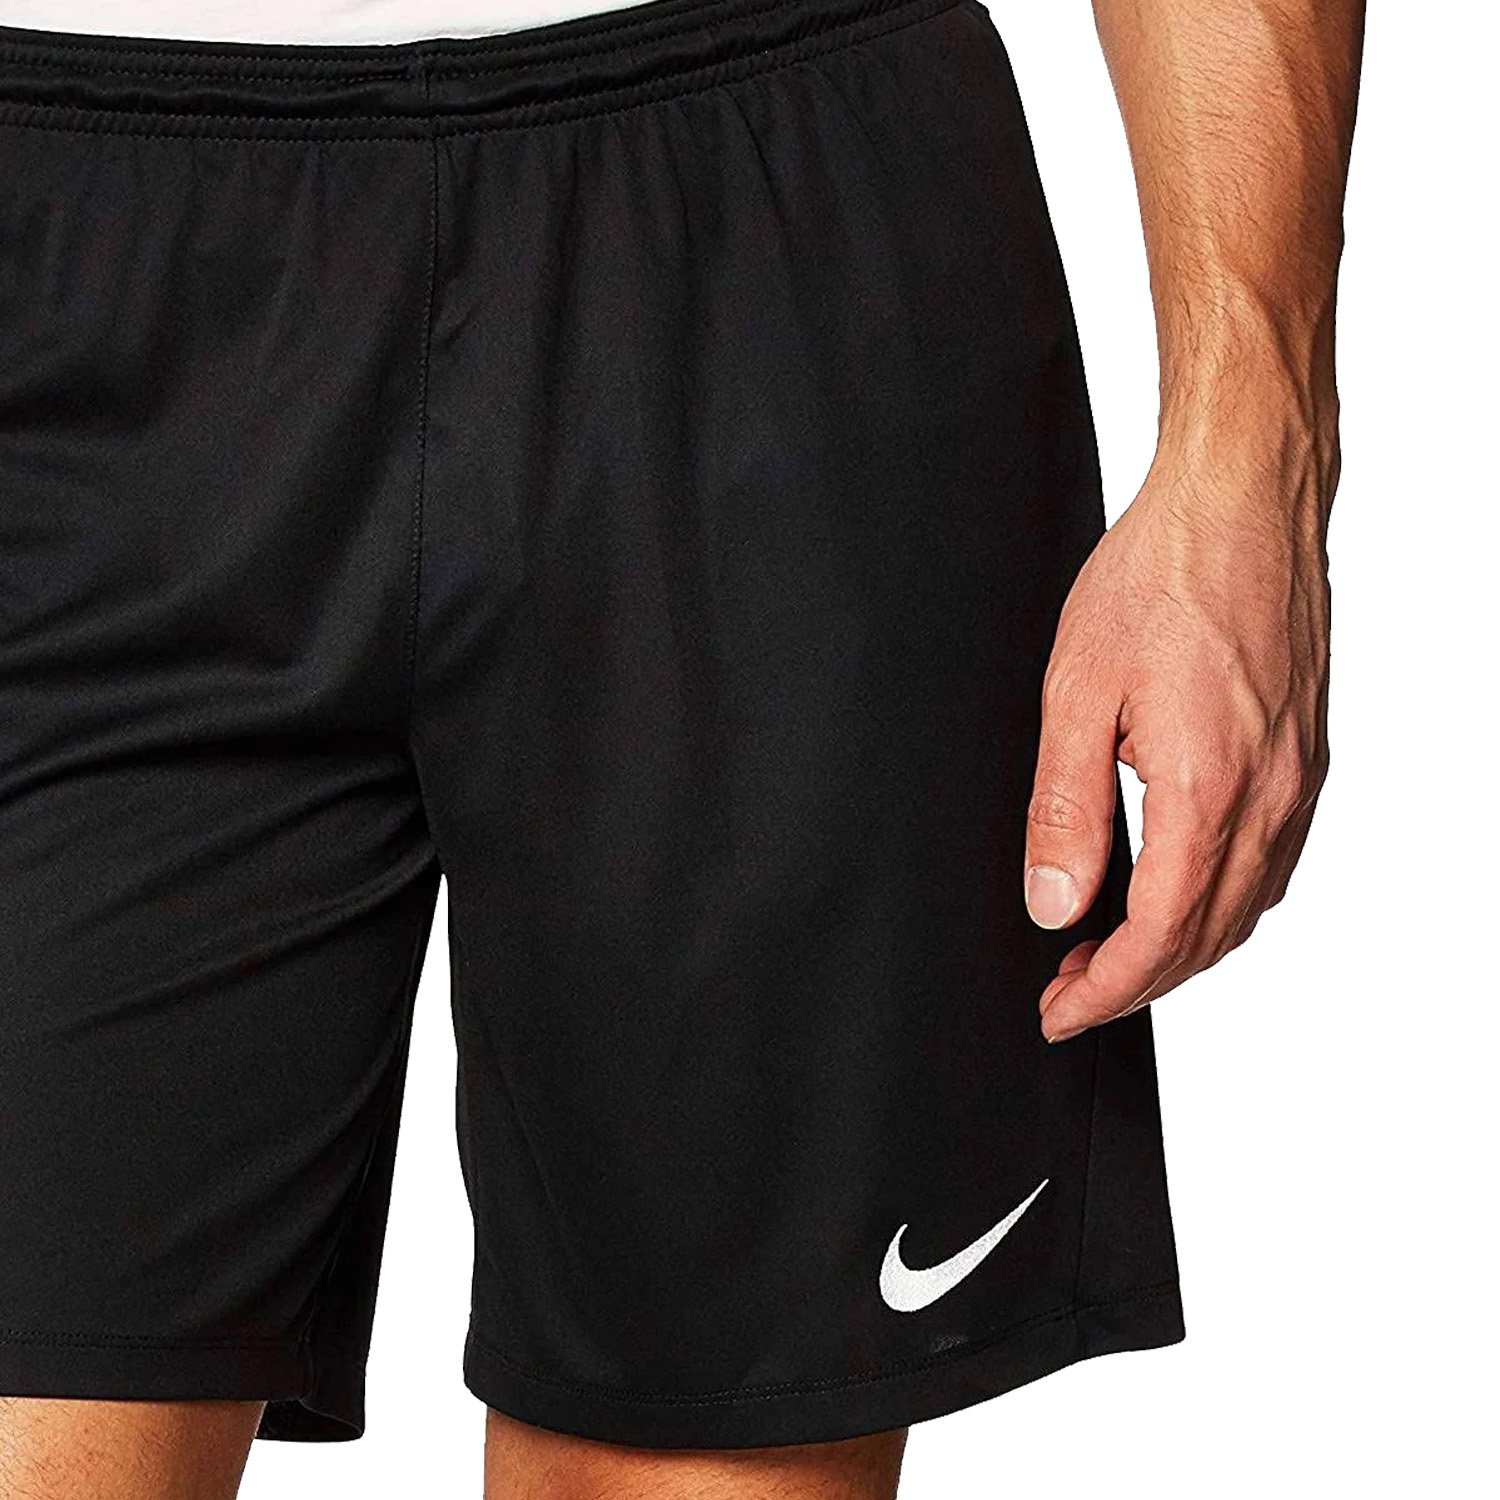 Nike Dri-Fit Classic II Short